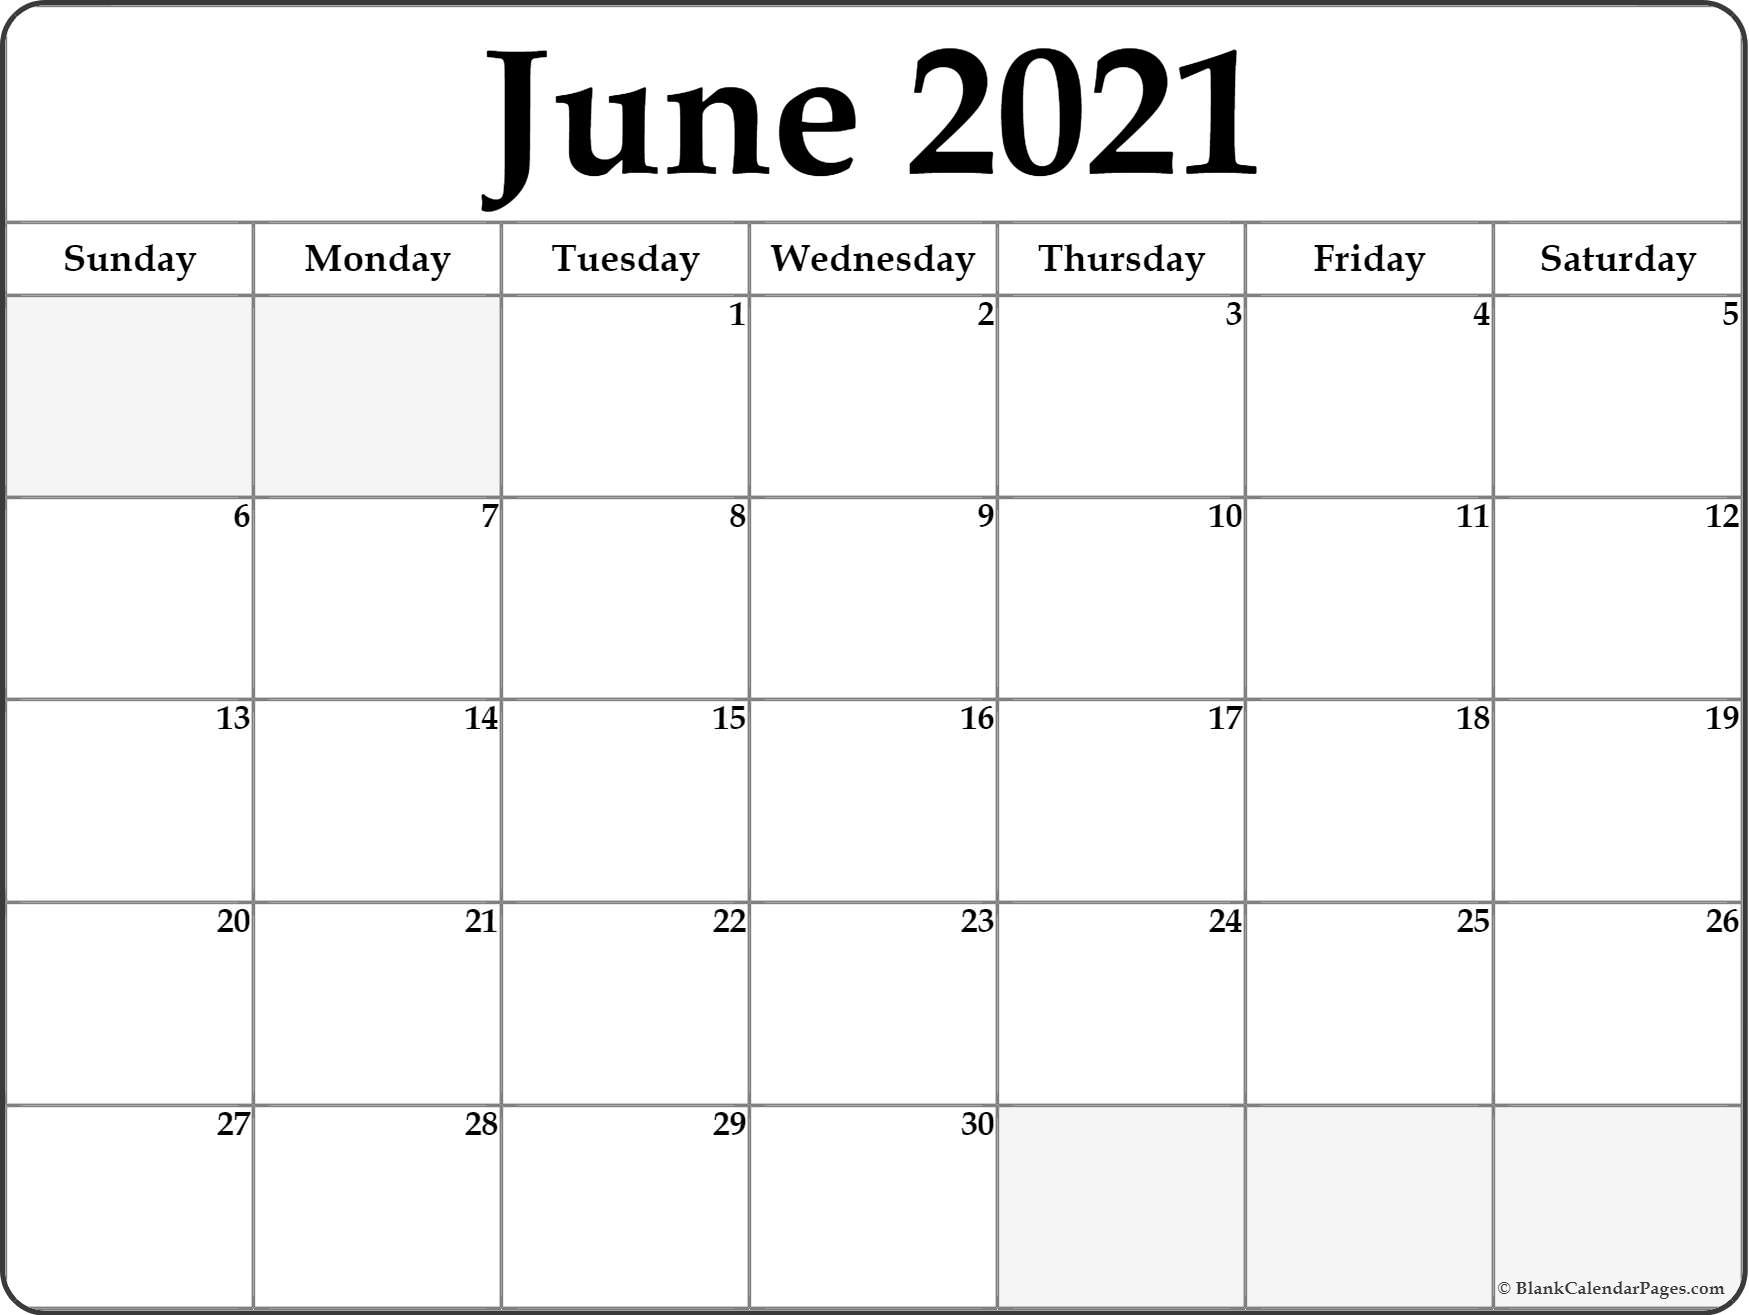 June 2021 Calendar | Free Printable Monthly Calendars-Free June 2021 Calendar Templates Printable